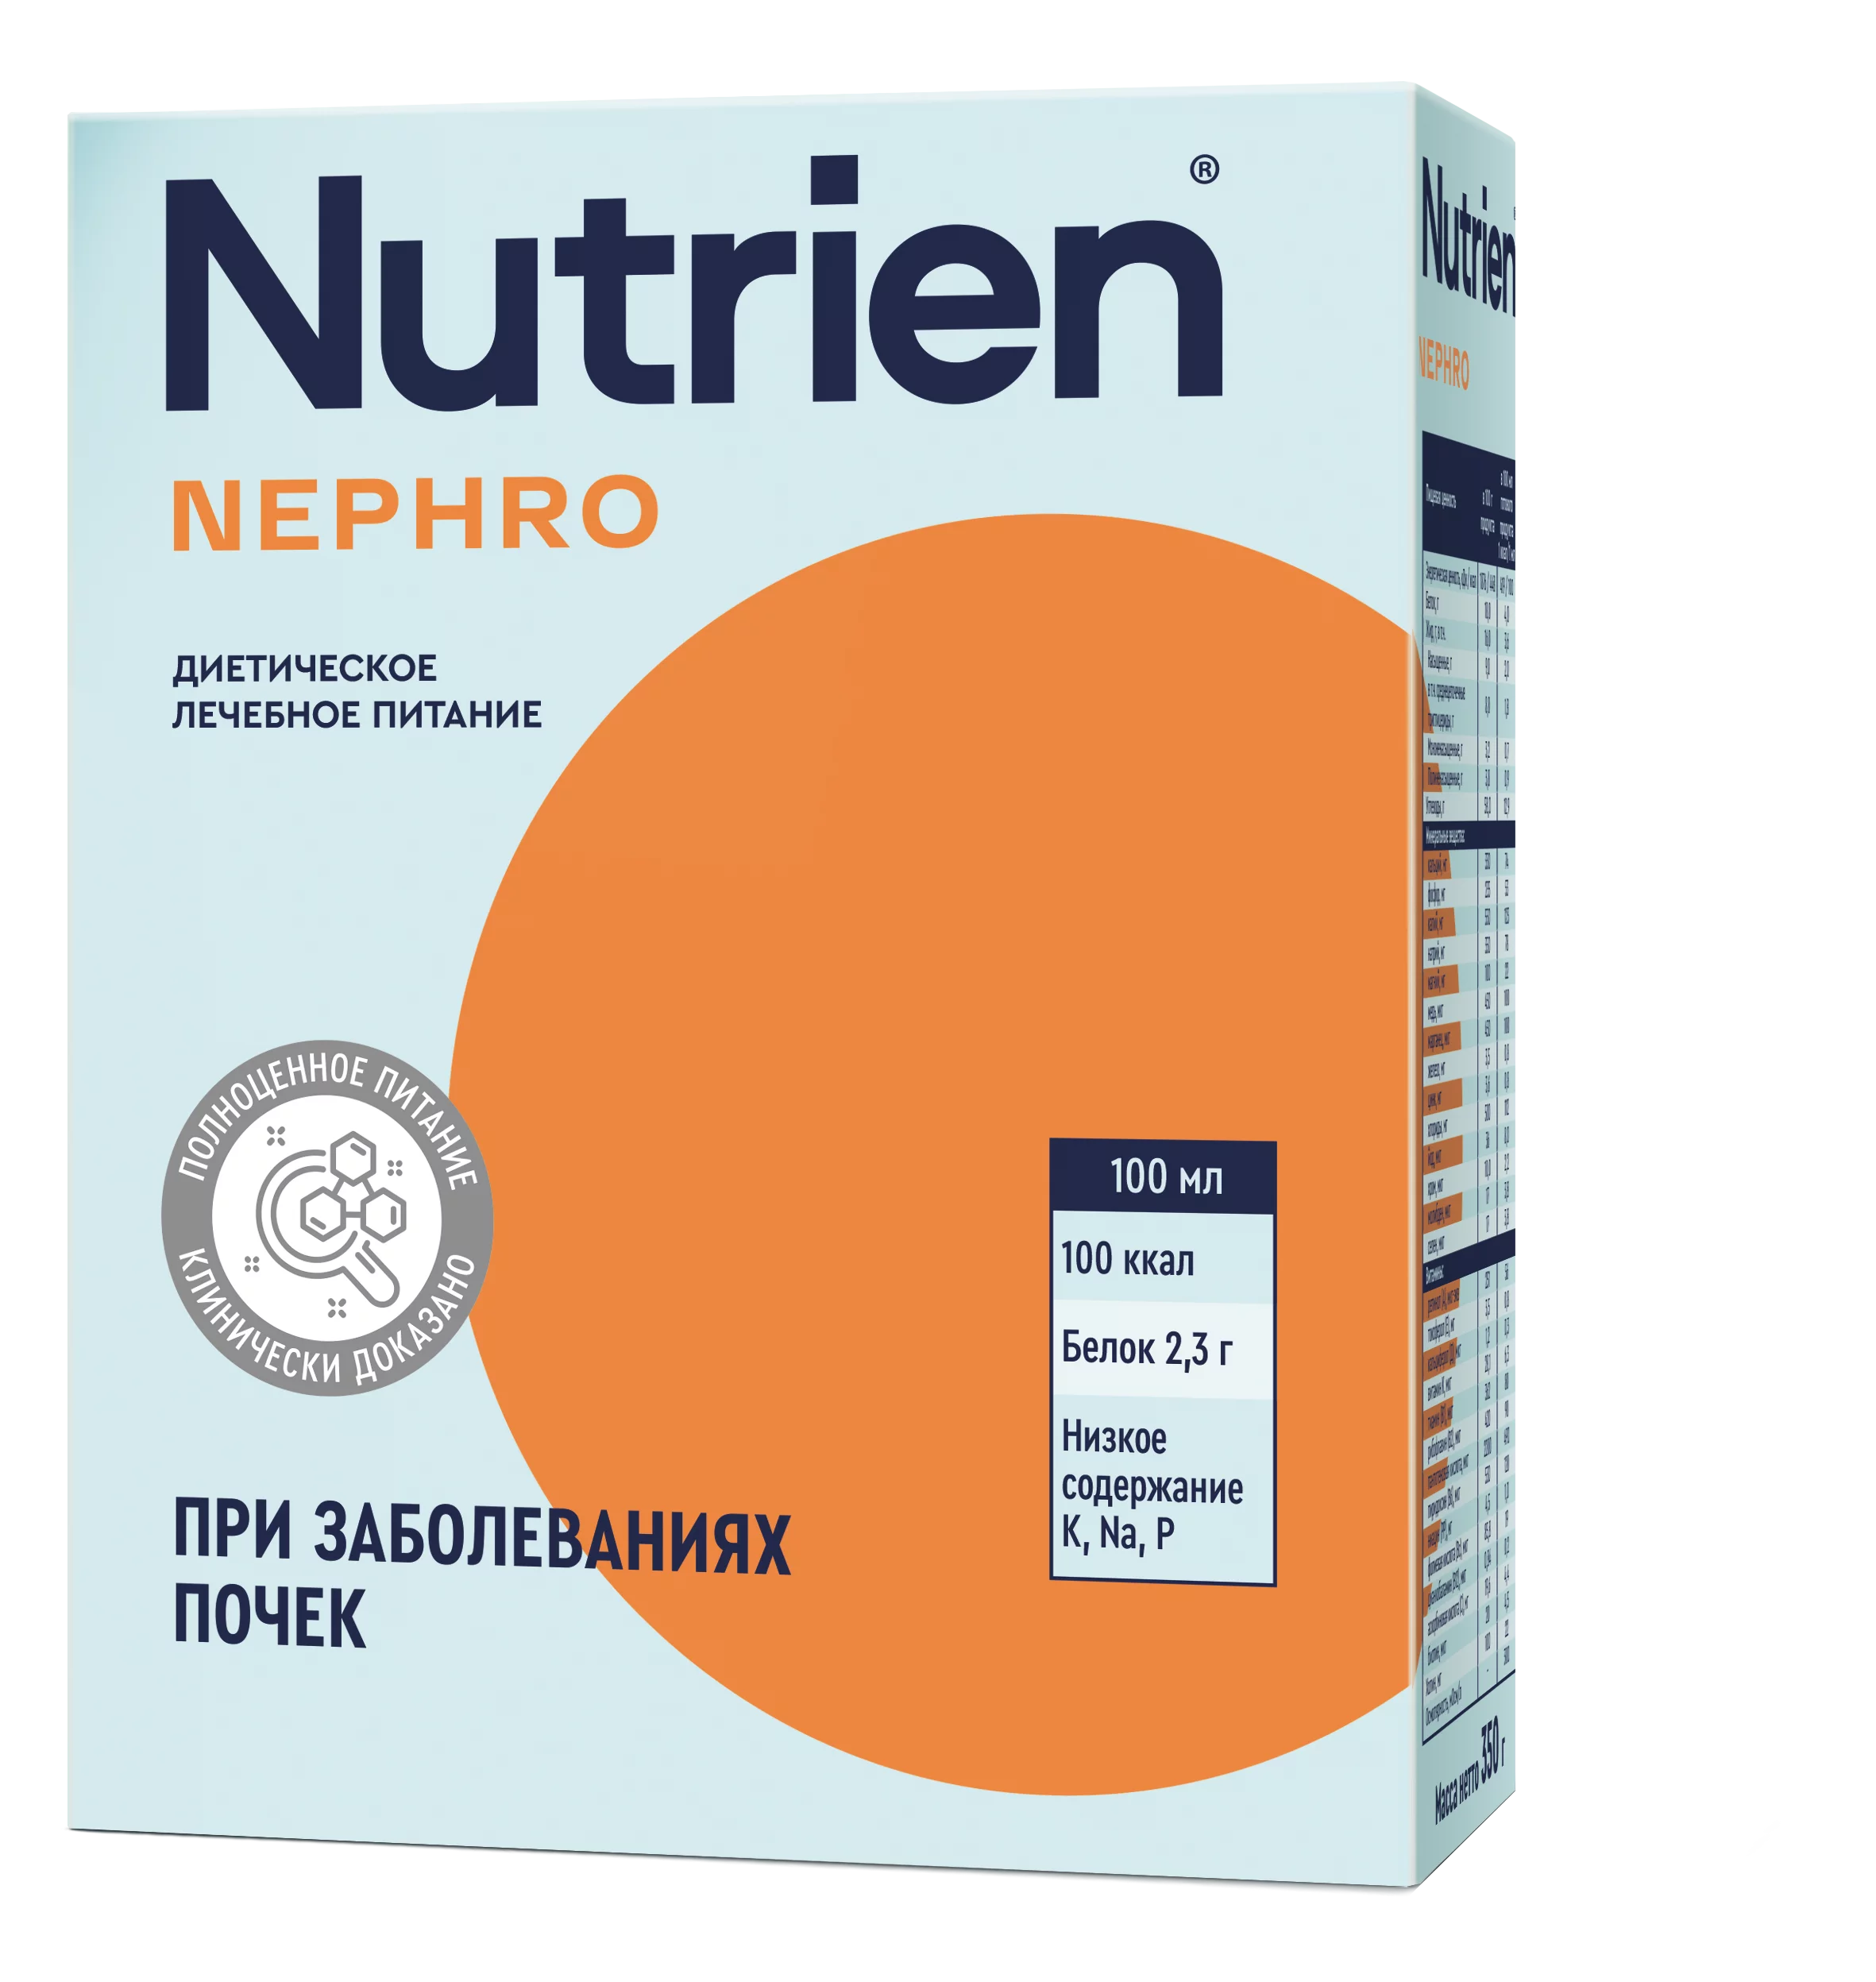 Nurtien Nephro - 1